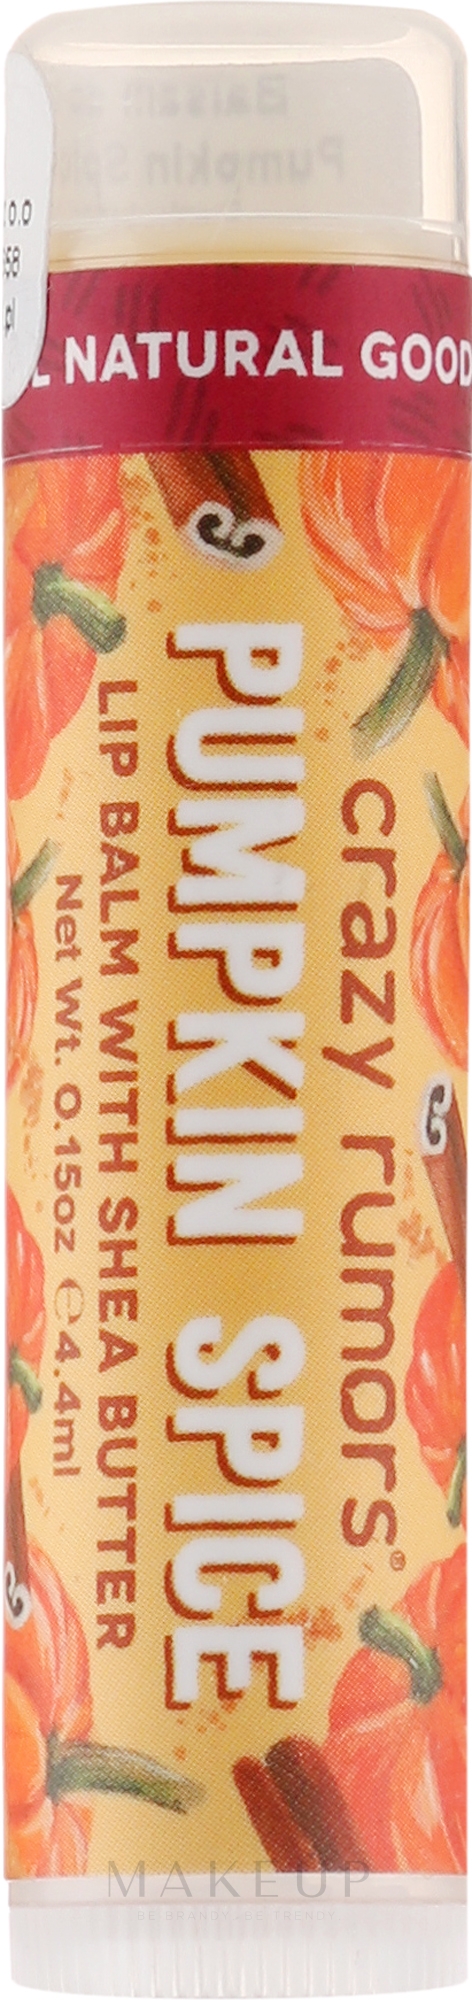 Lippenbalsam mit Sheabutter Pumpkin Spice - Crazy Rumors Pumpkin Spice Lip Balm — Bild 4.25 g